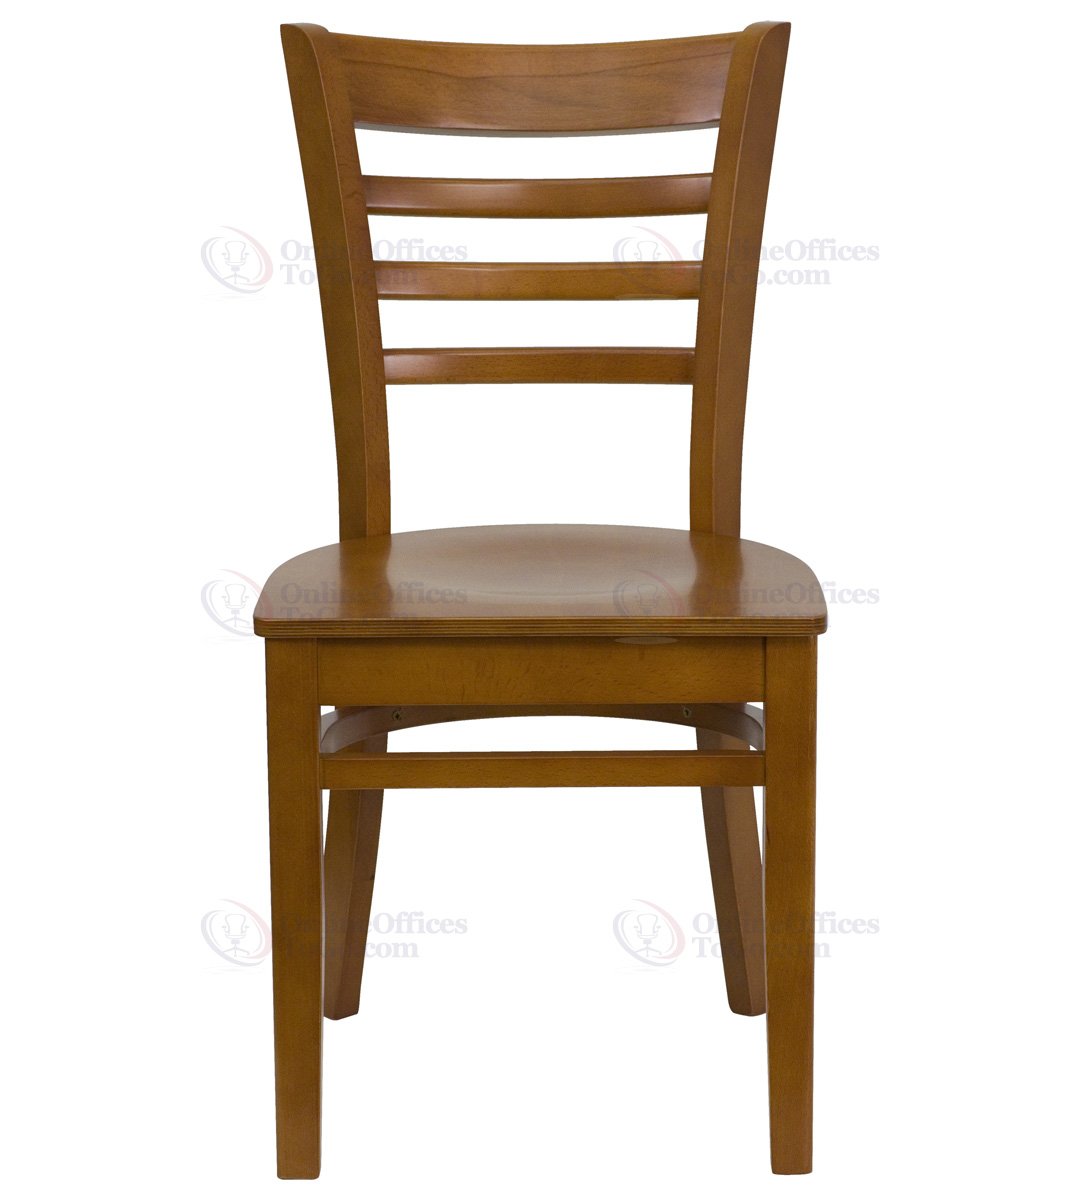 ct 8162 стул с мягким сиденьем